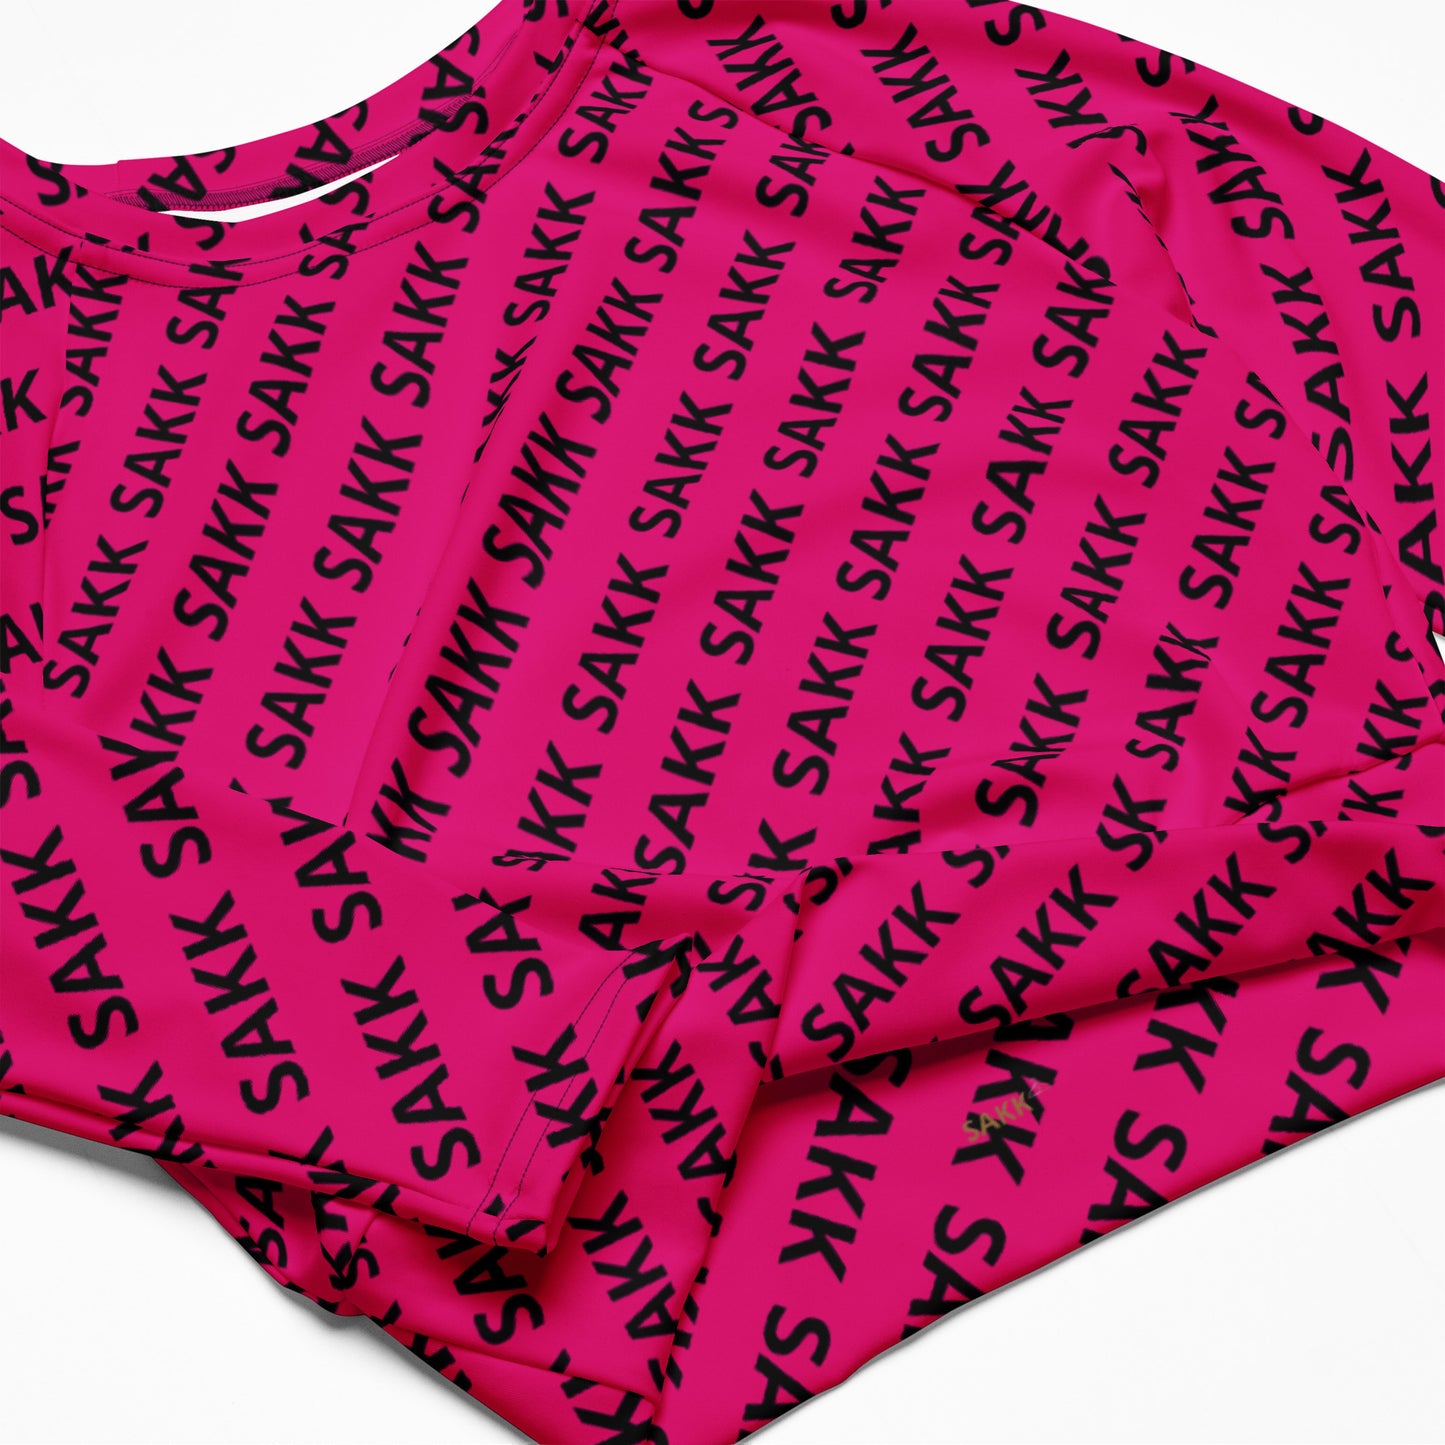 Poppin Pink long-sleeve crop top sakkstyles.com